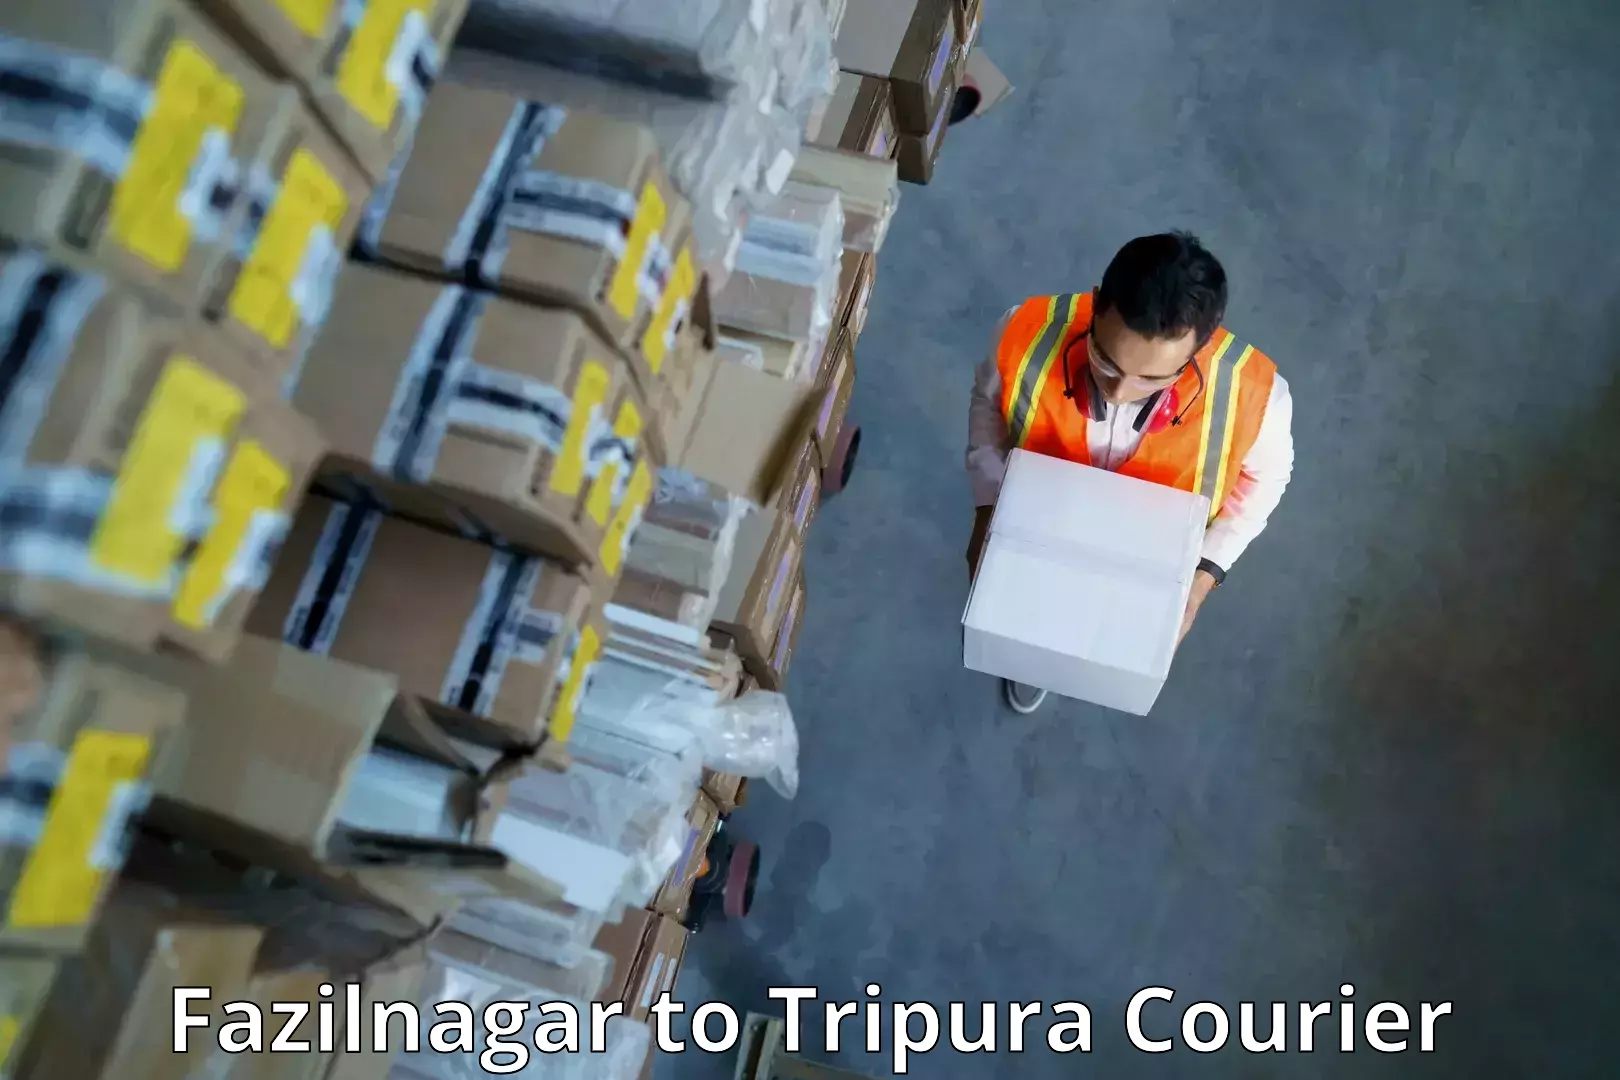 Express delivery capabilities Fazilnagar to Udaipur Tripura